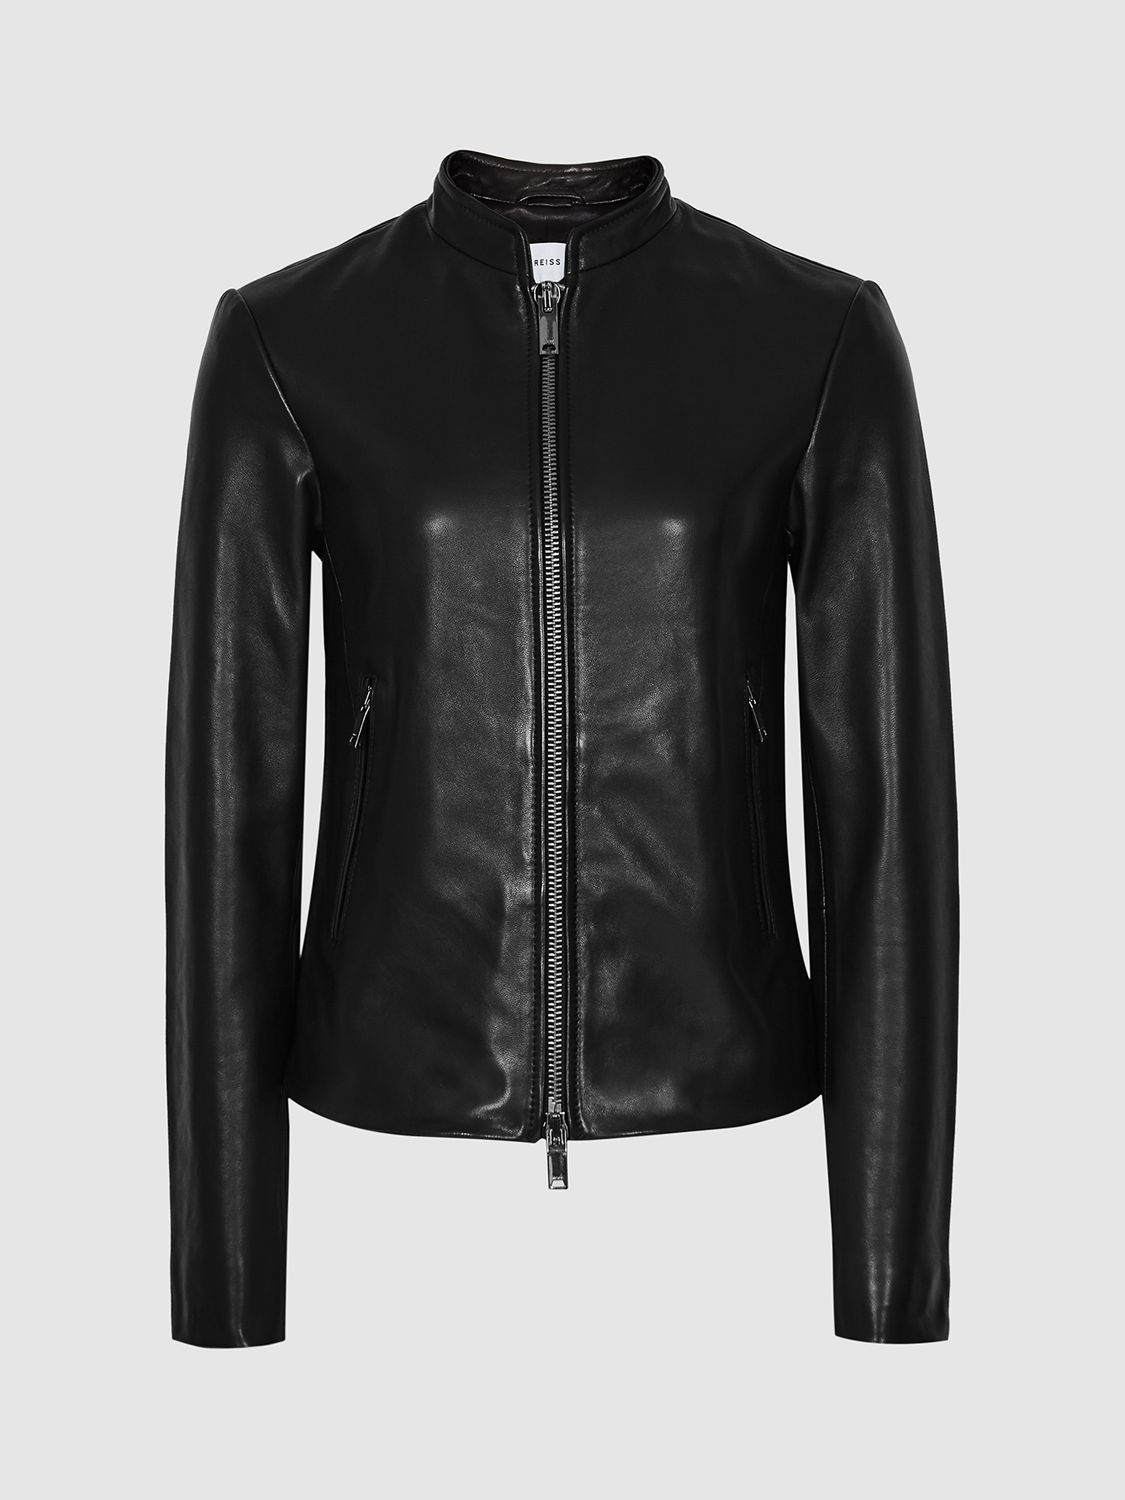 Reiss Allie Leather Biker Jacket, Black, 6